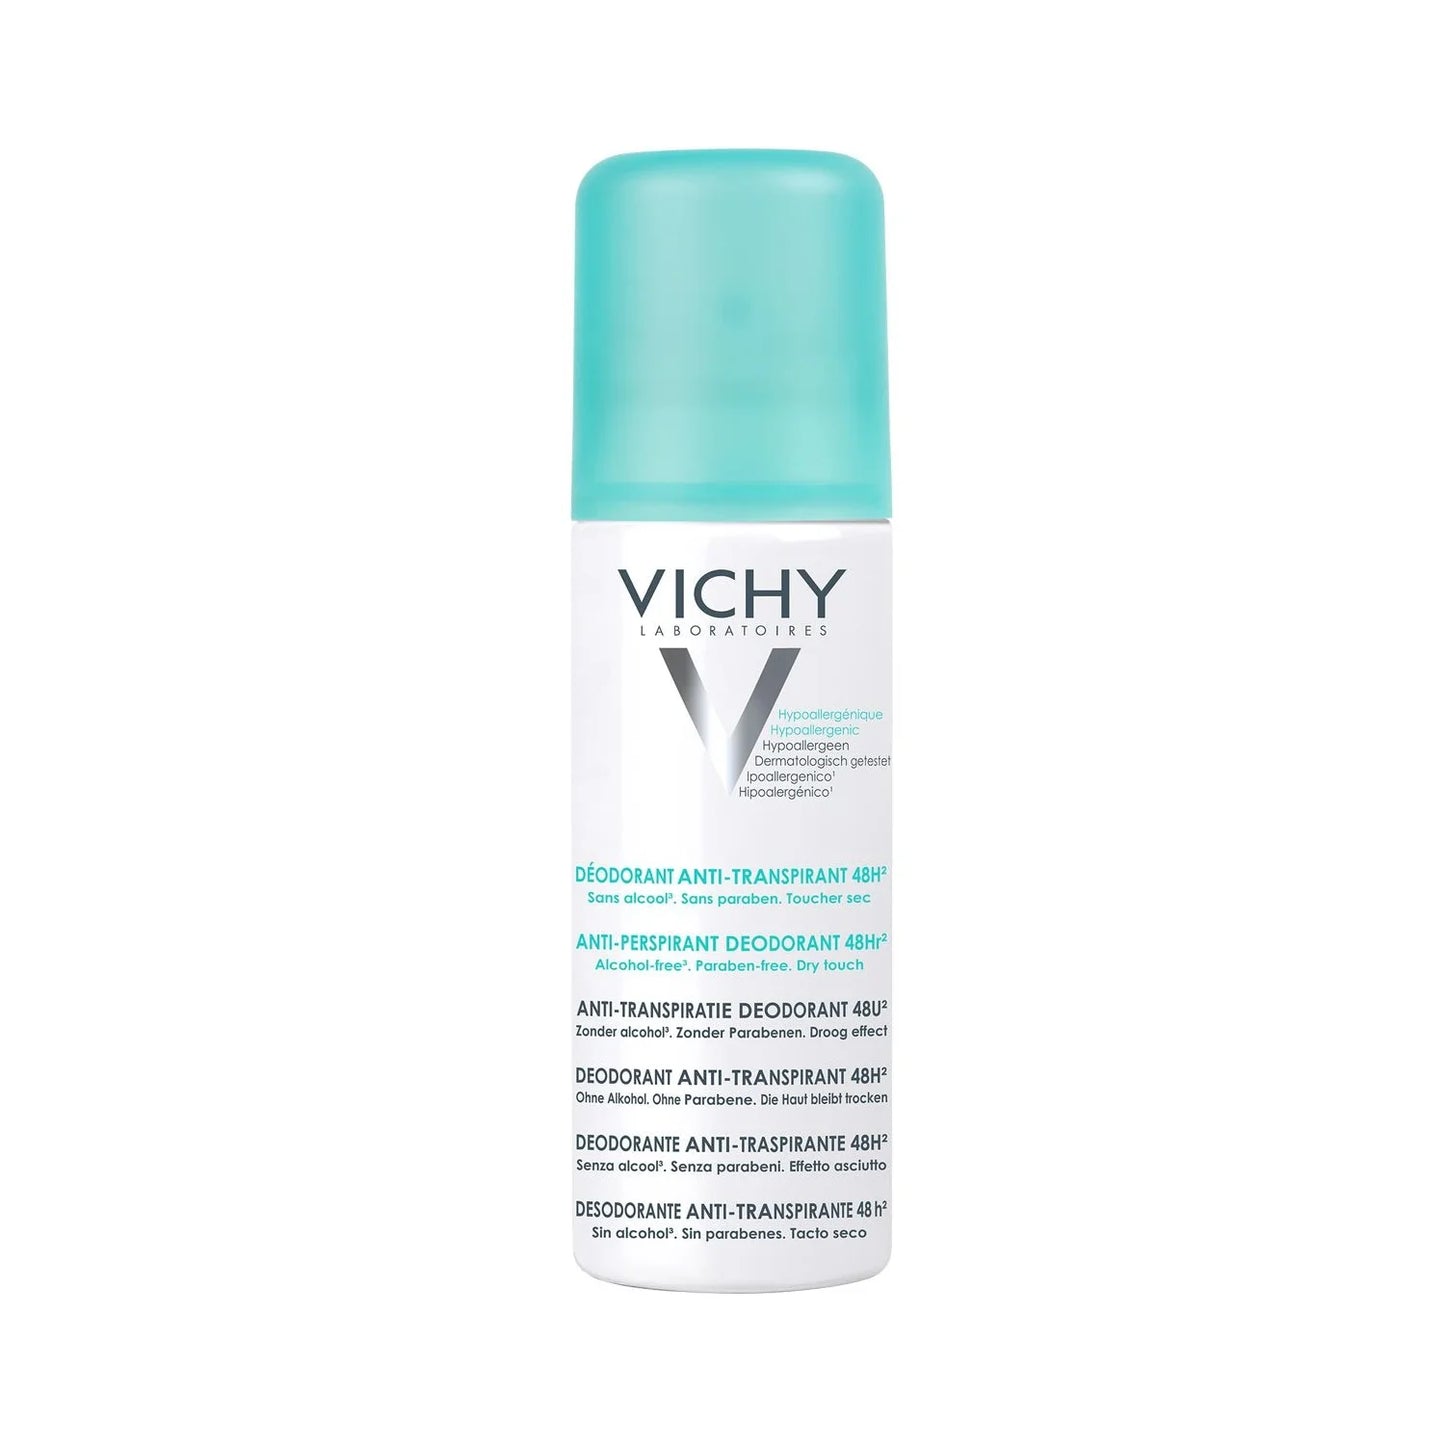 VICHY deodorant anti-transparent spray 48h